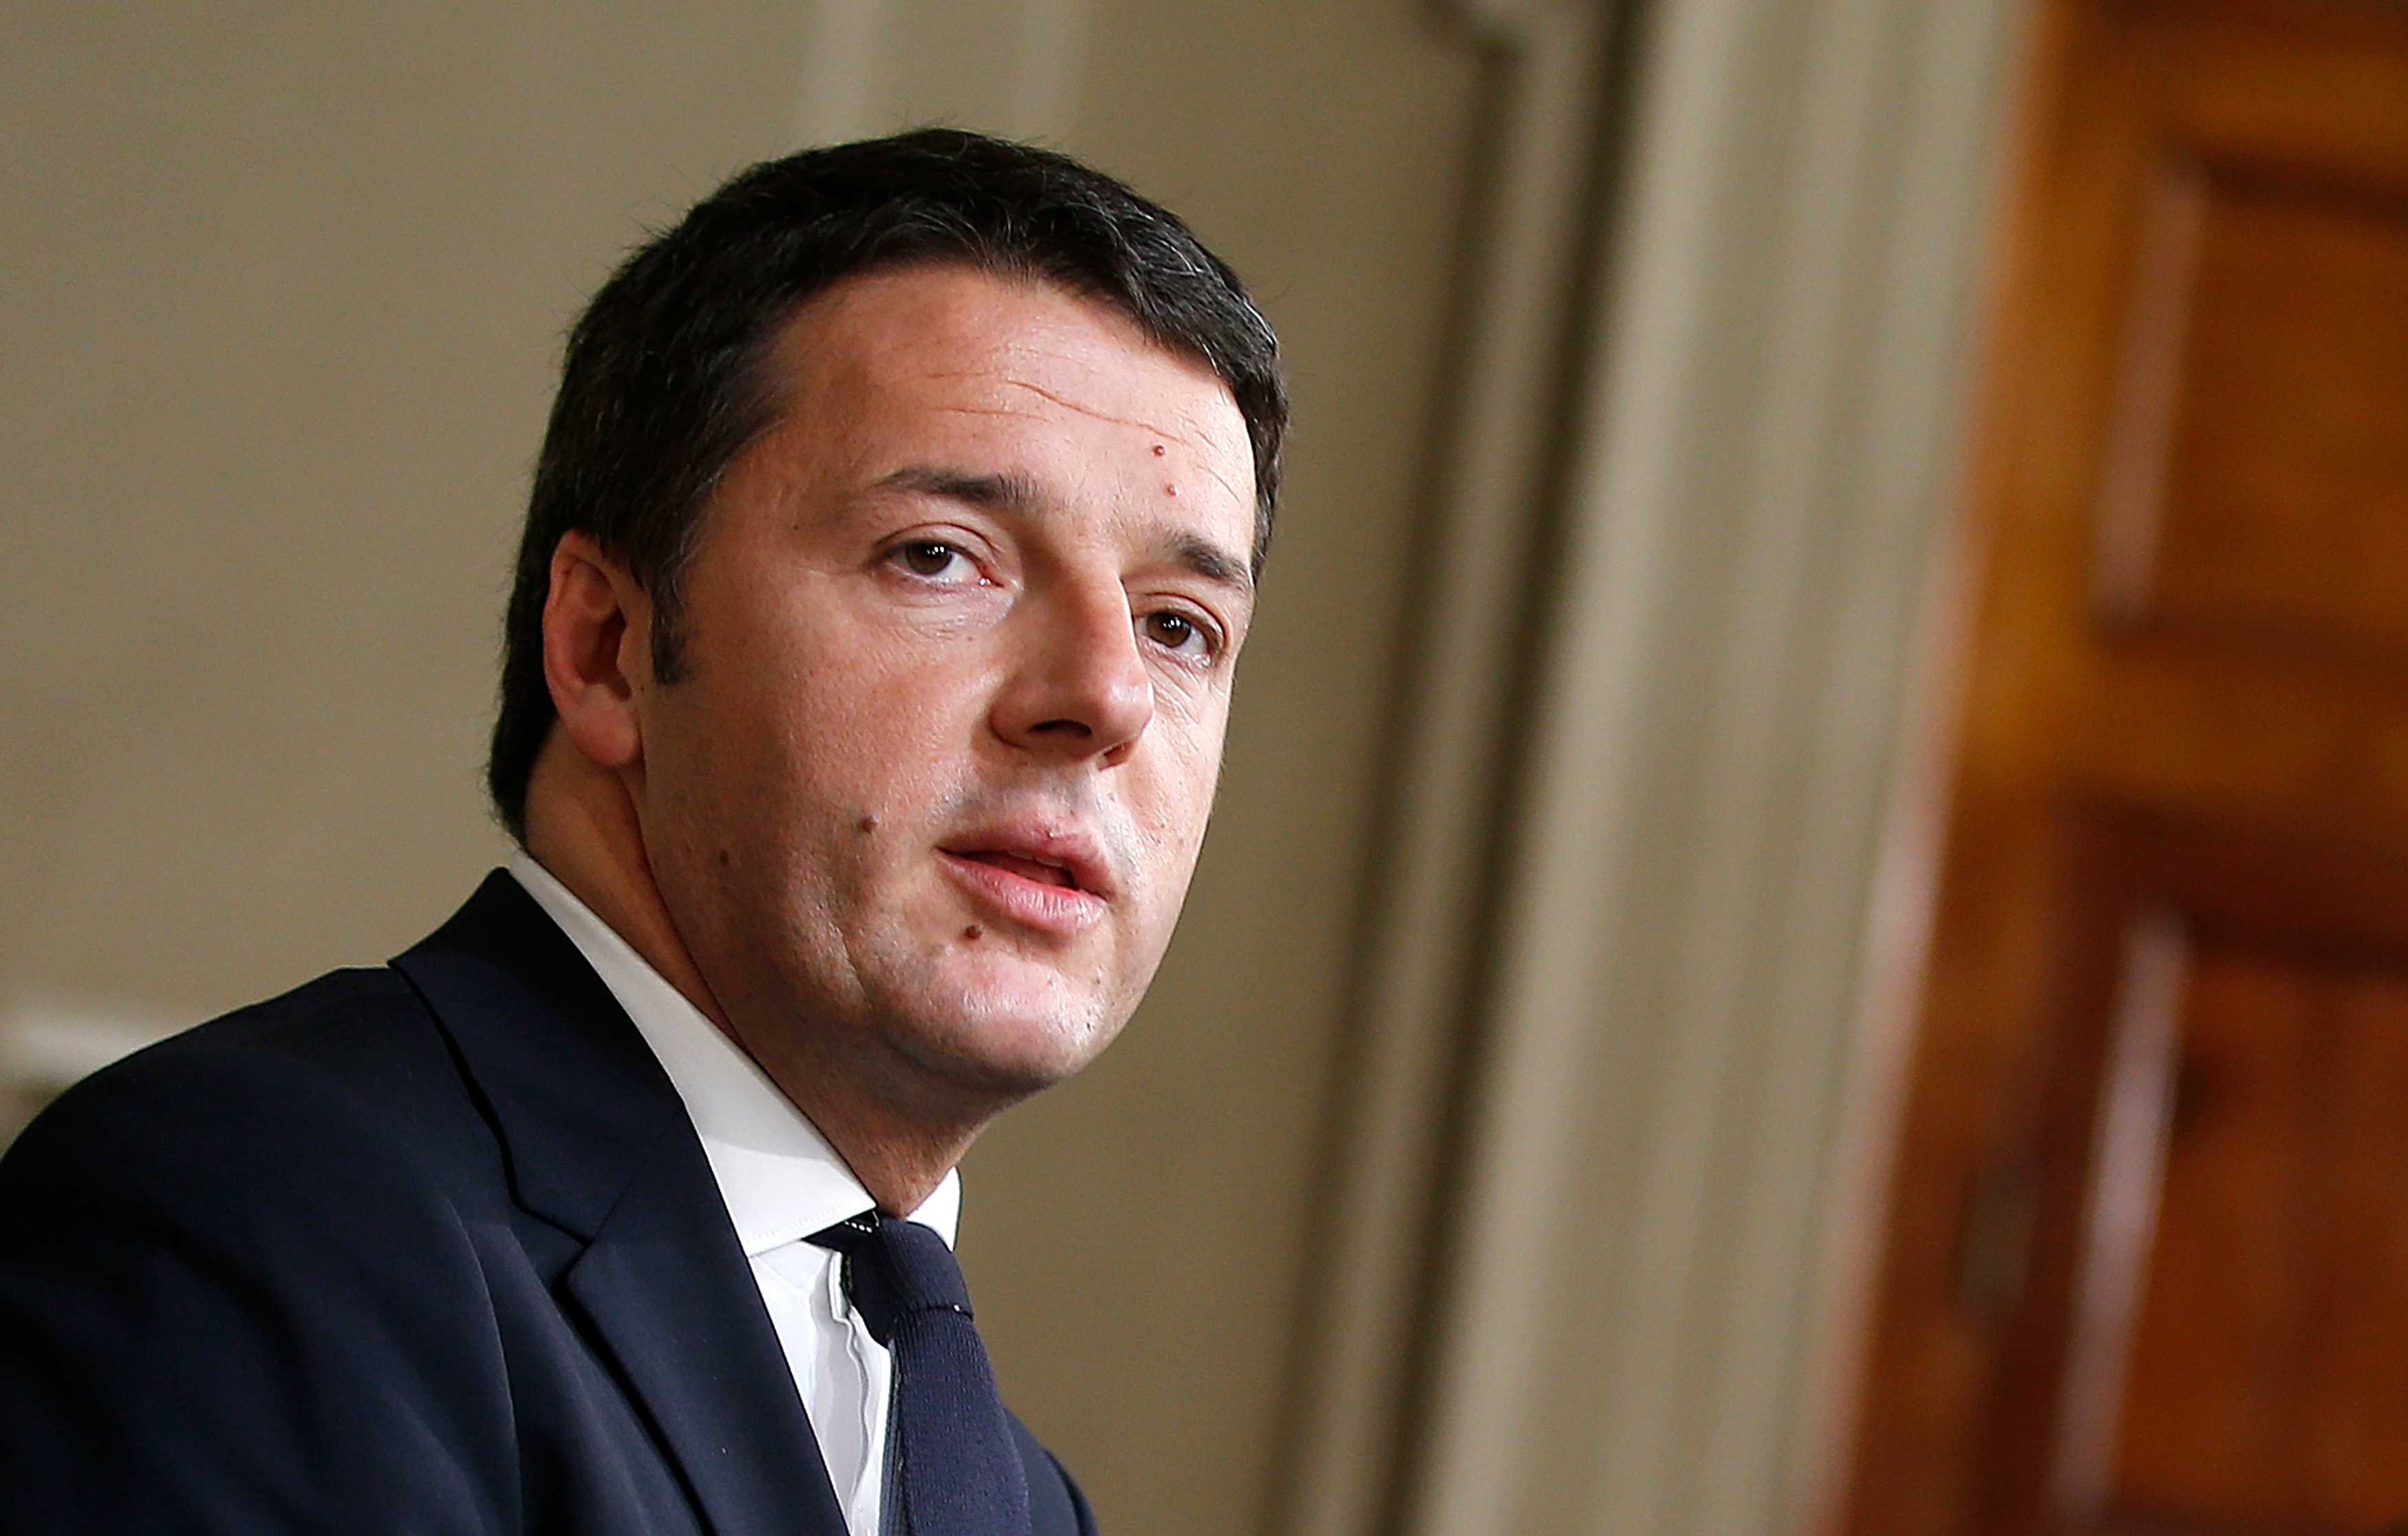 Gioco d'azzardo, Renzi: "Via le slot da bar e tabaccherie"